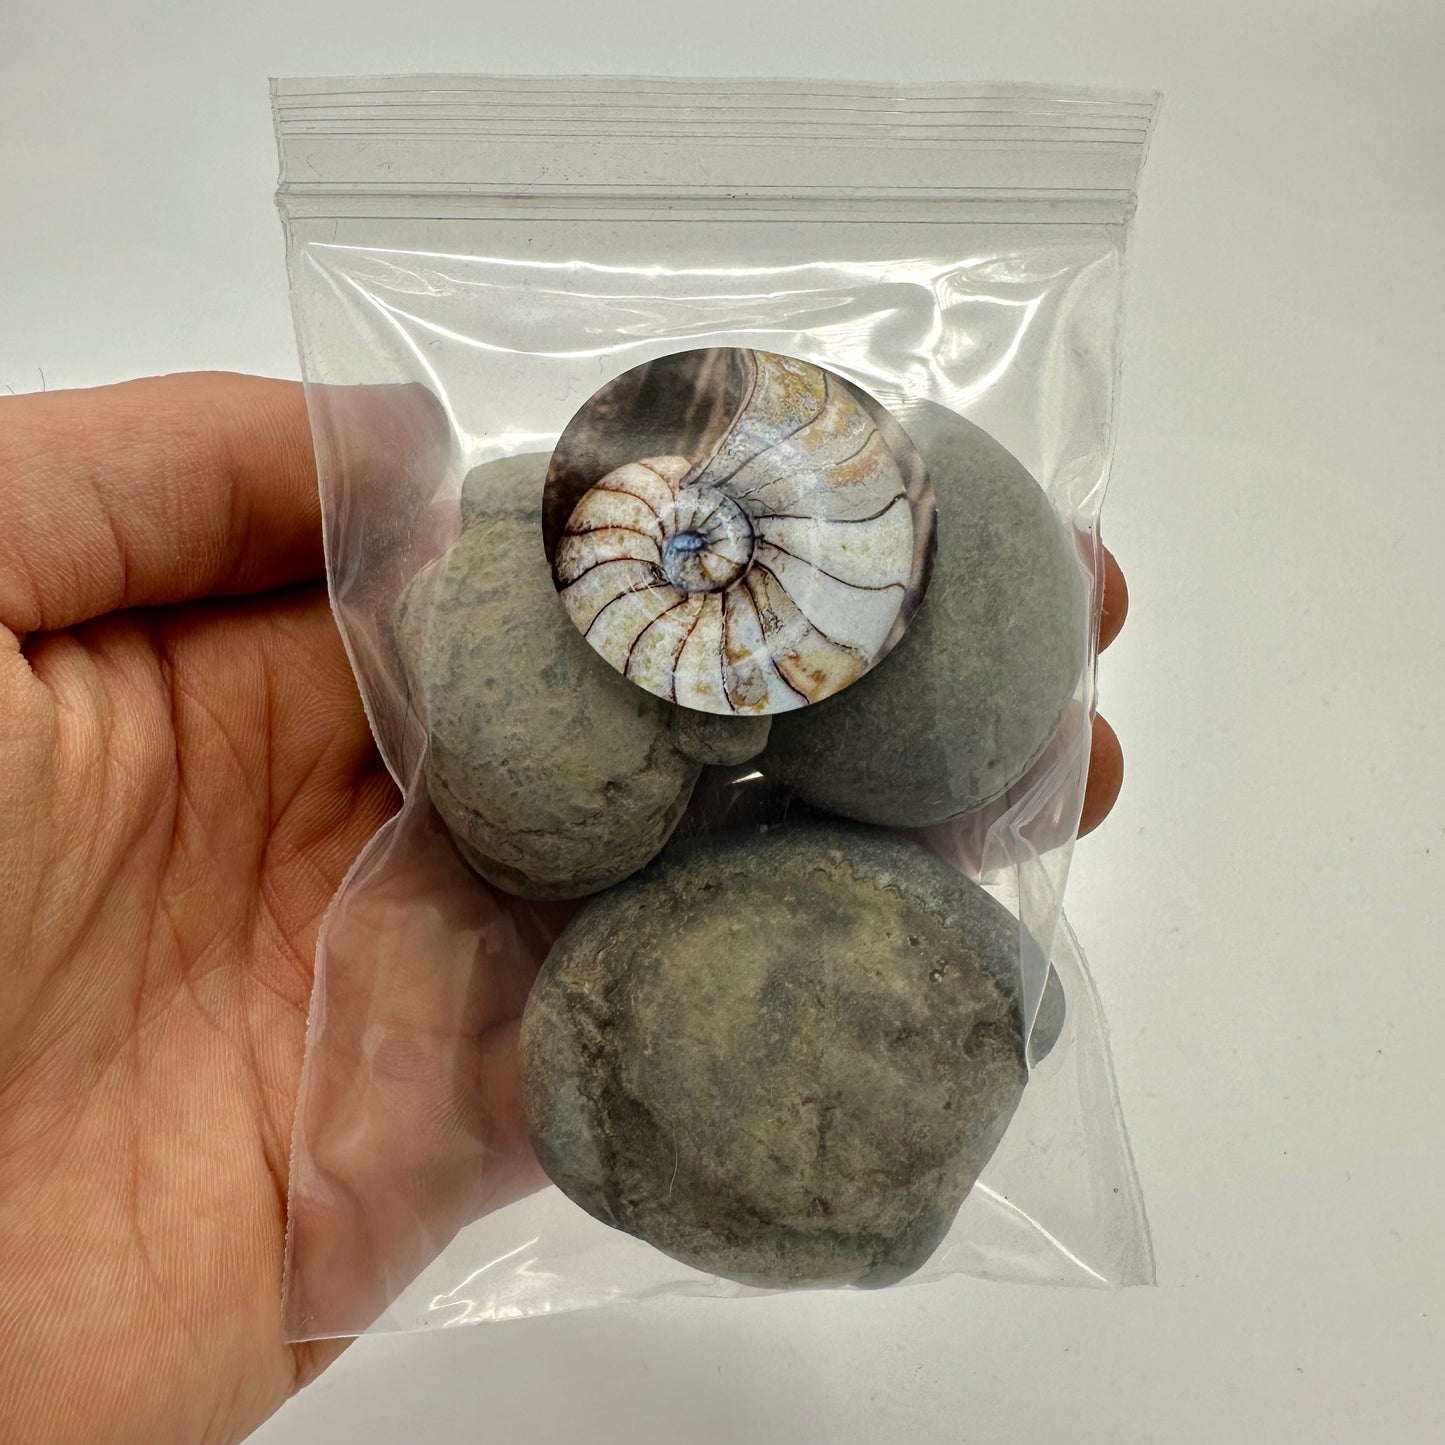 Yorkshire Fossils Box Bundle - Ammonite shell fossil Jurassic Coast, North Yorkshire